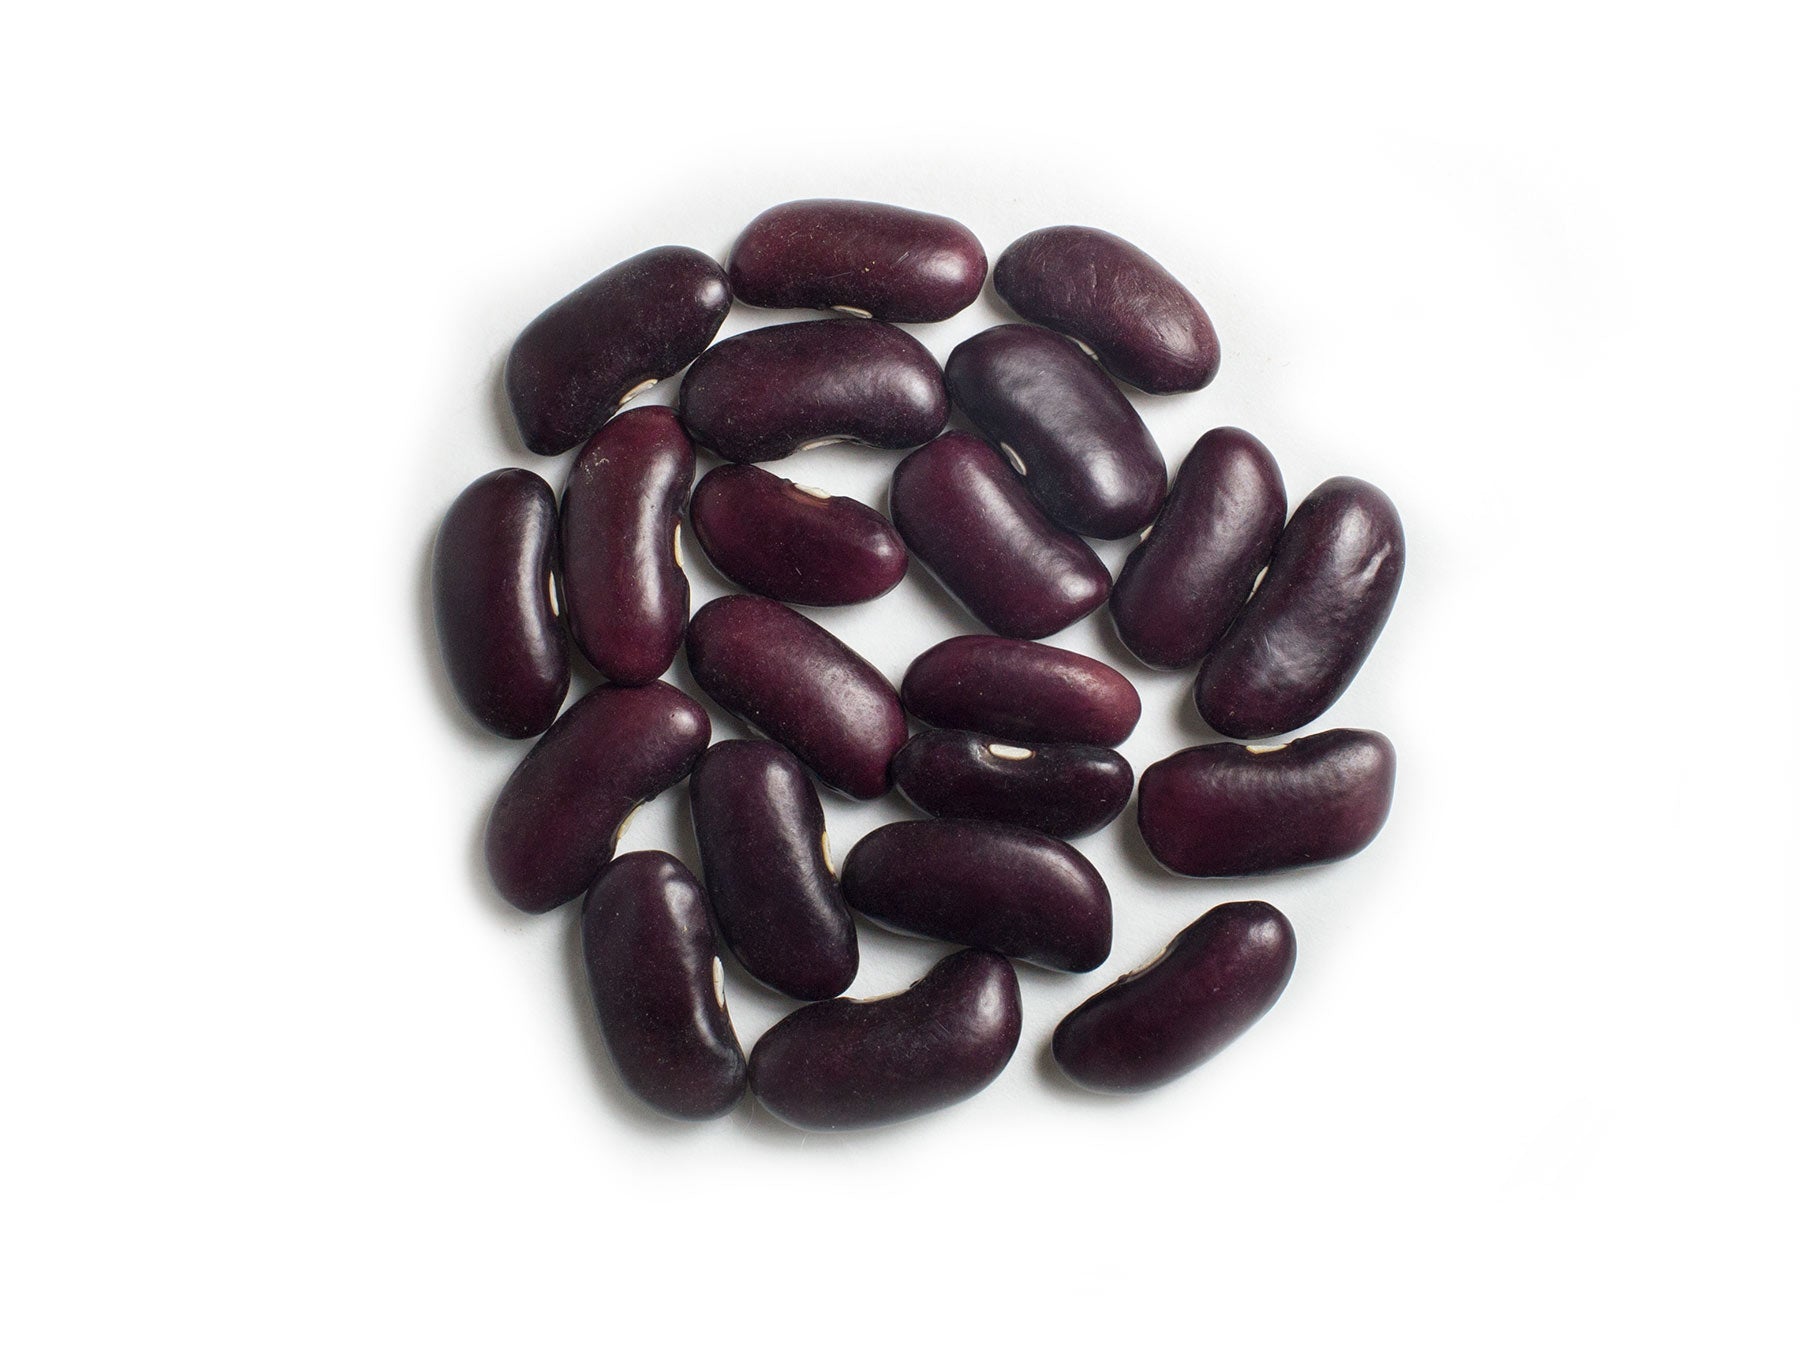 Dry Bean (Bush) - Big Red Kidney